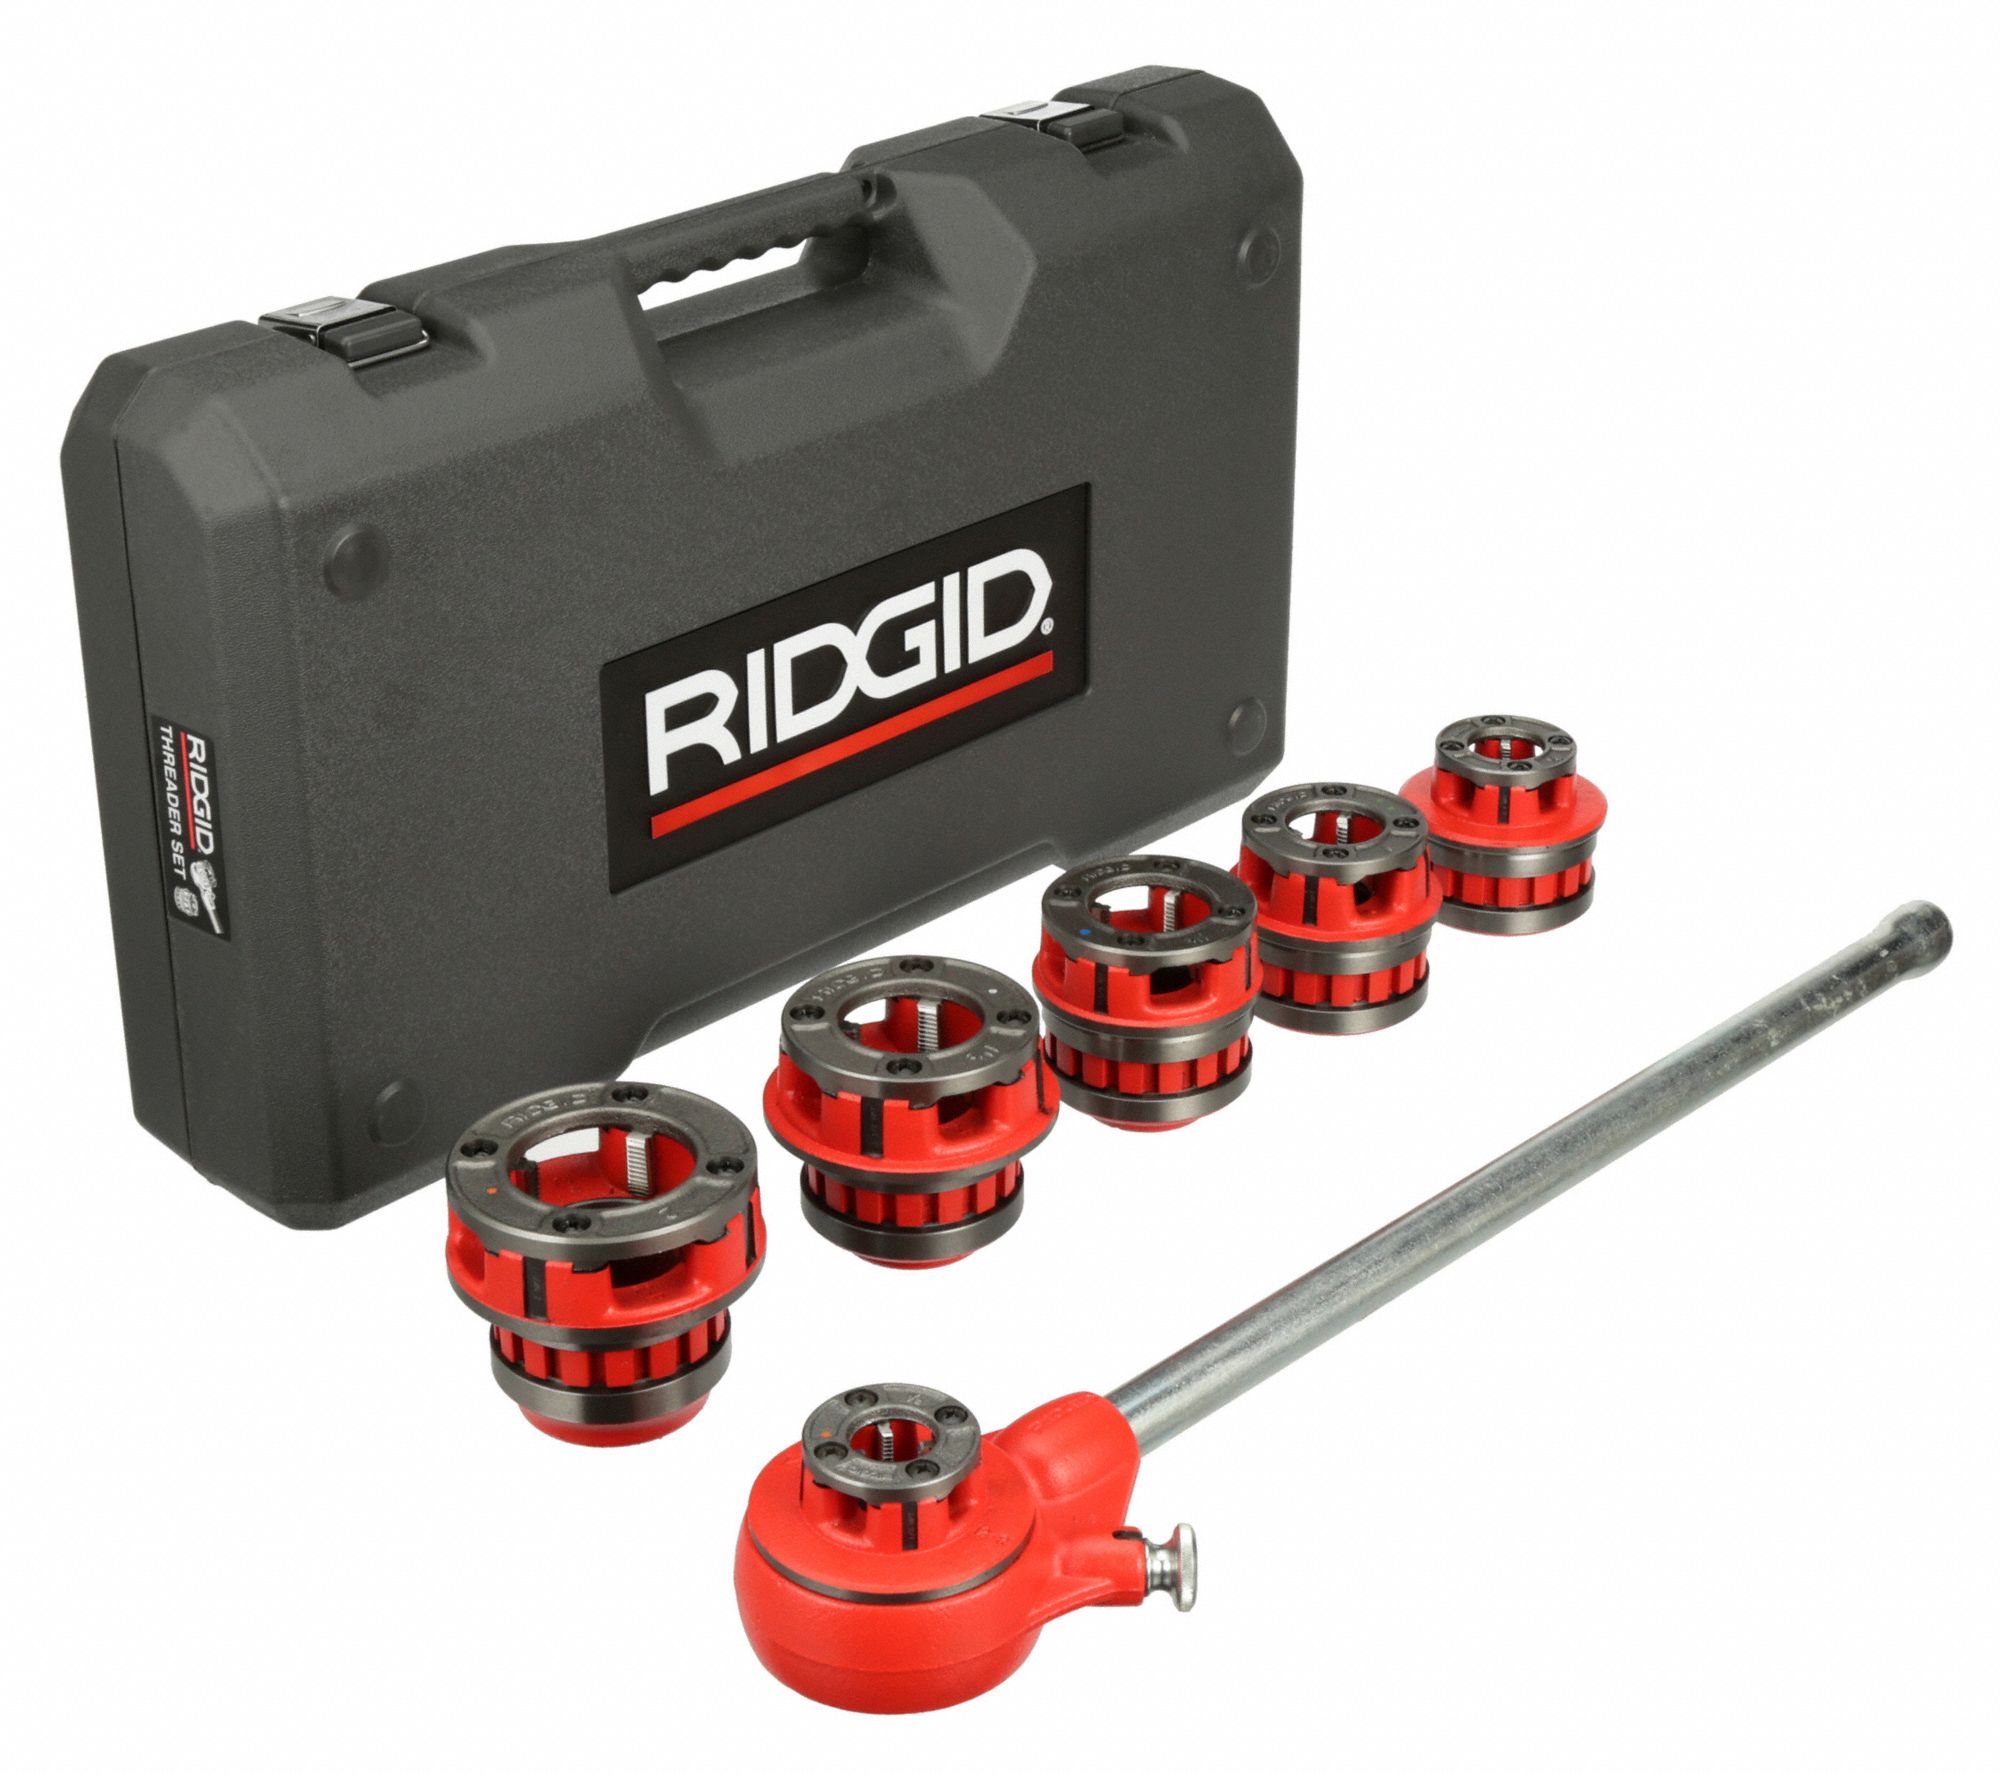 RIDGID Ridgid Manual Ratchet Threader 